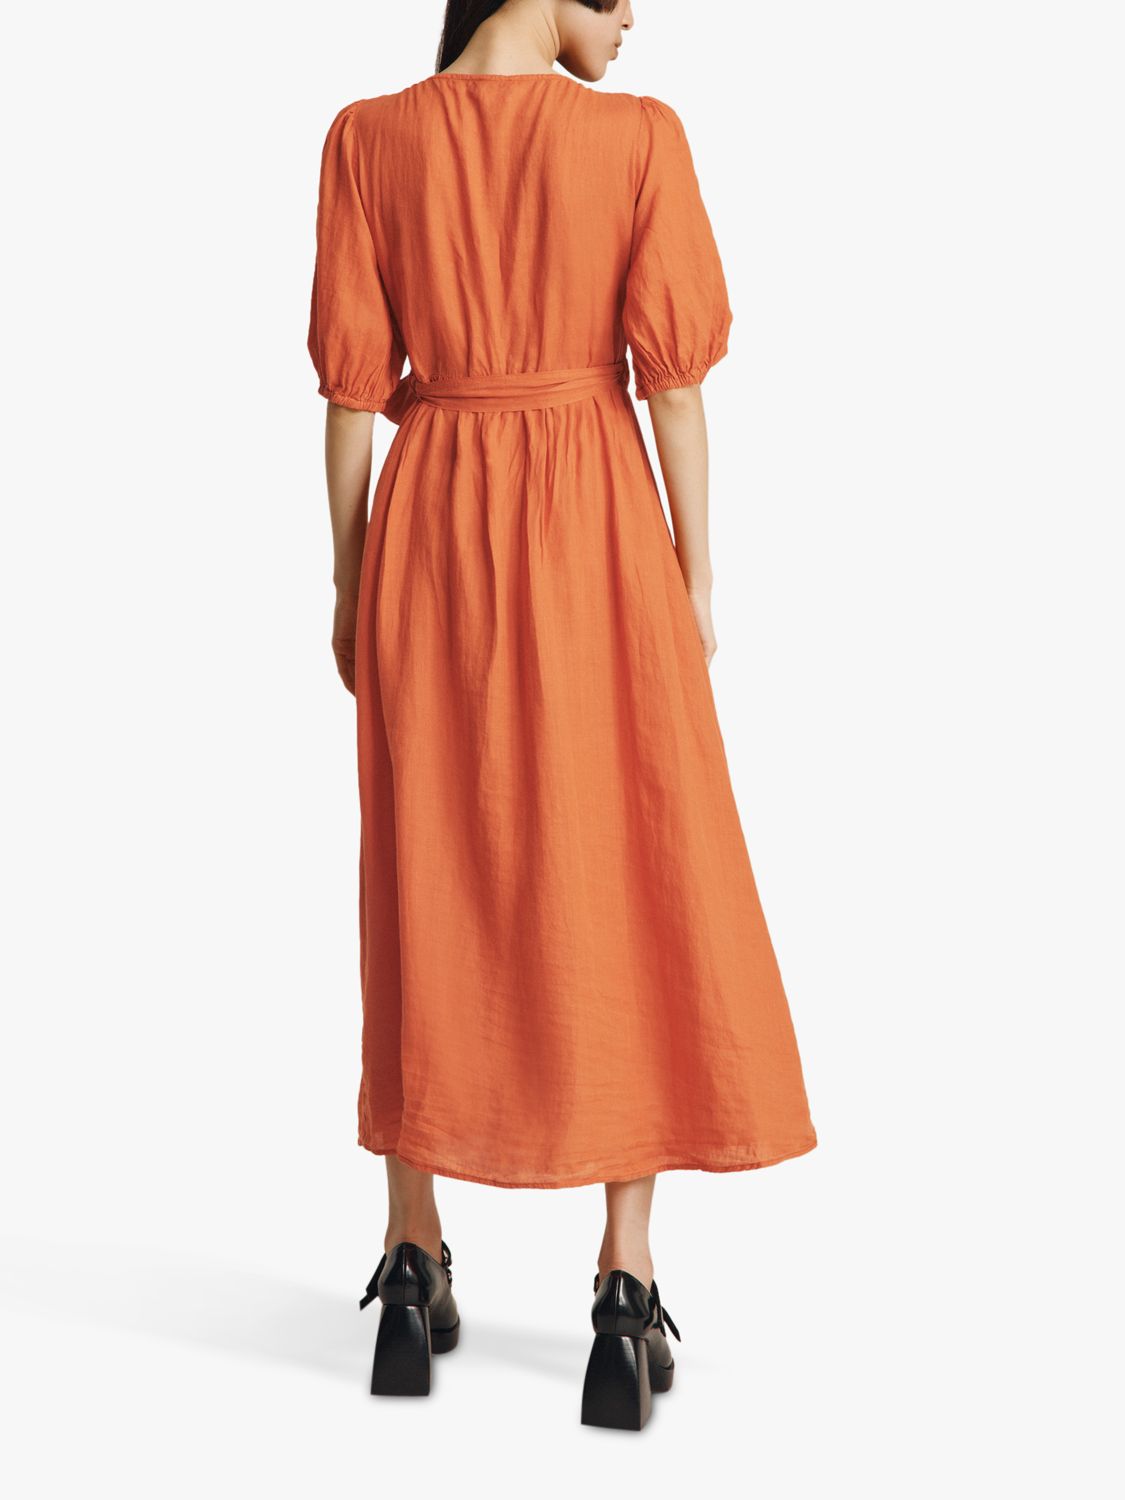 Ghost Greta Ramie Linen Wrap Dress, Tan at John Lewis & Partners